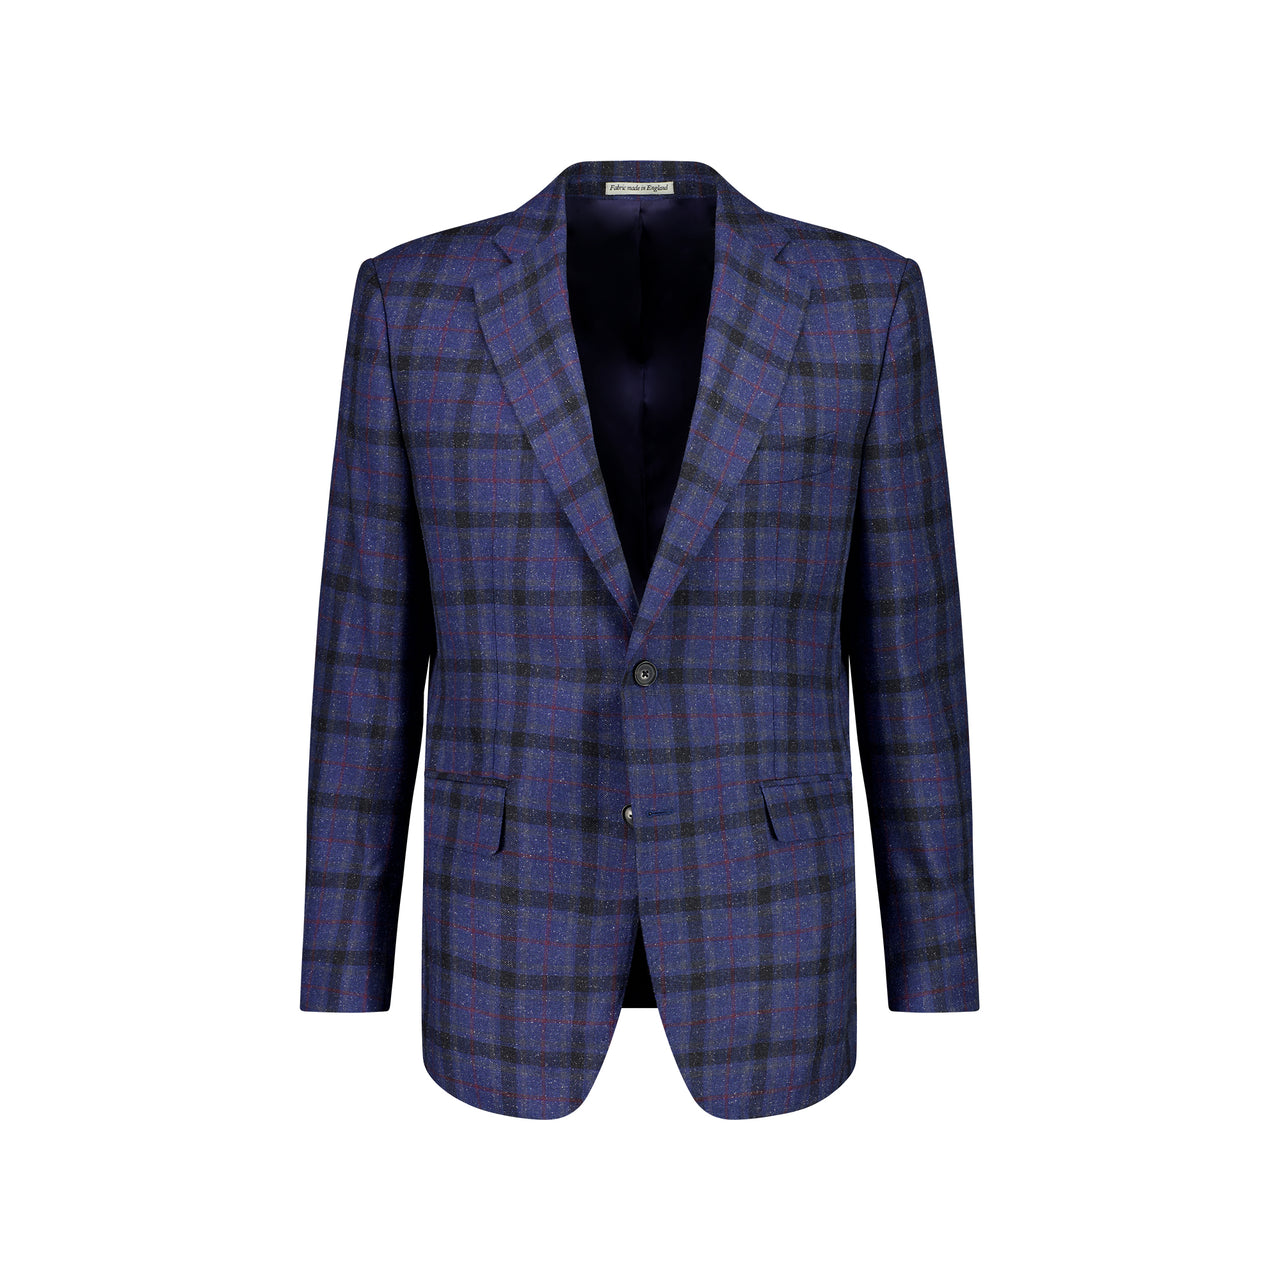 HENRY SARTORIAL DORMEUIL Wool/Silk Check Jacket SOFT BURGUNDY/NAVY REG